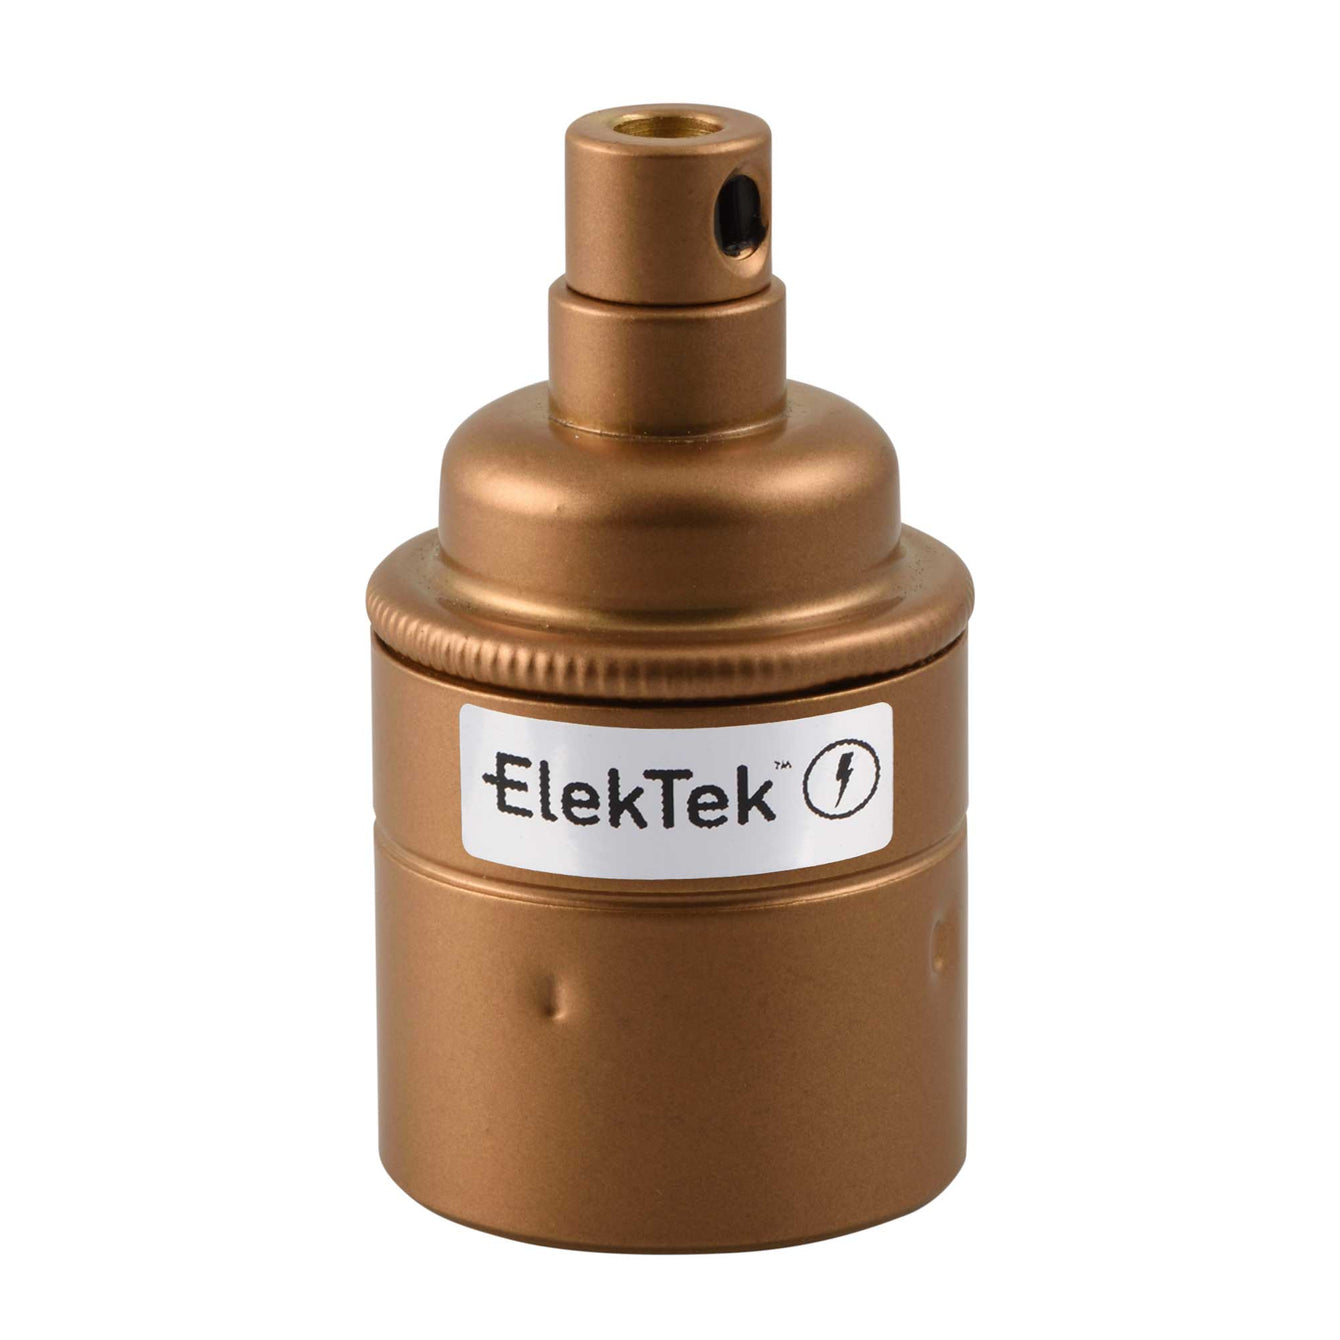 ElekTek ES Edison Screw E27 Lamp Bulb Holder With Cord Grip  Plain Skirt Powder Coated Colours Solid Brass - Buy It Better Fusion Bronze